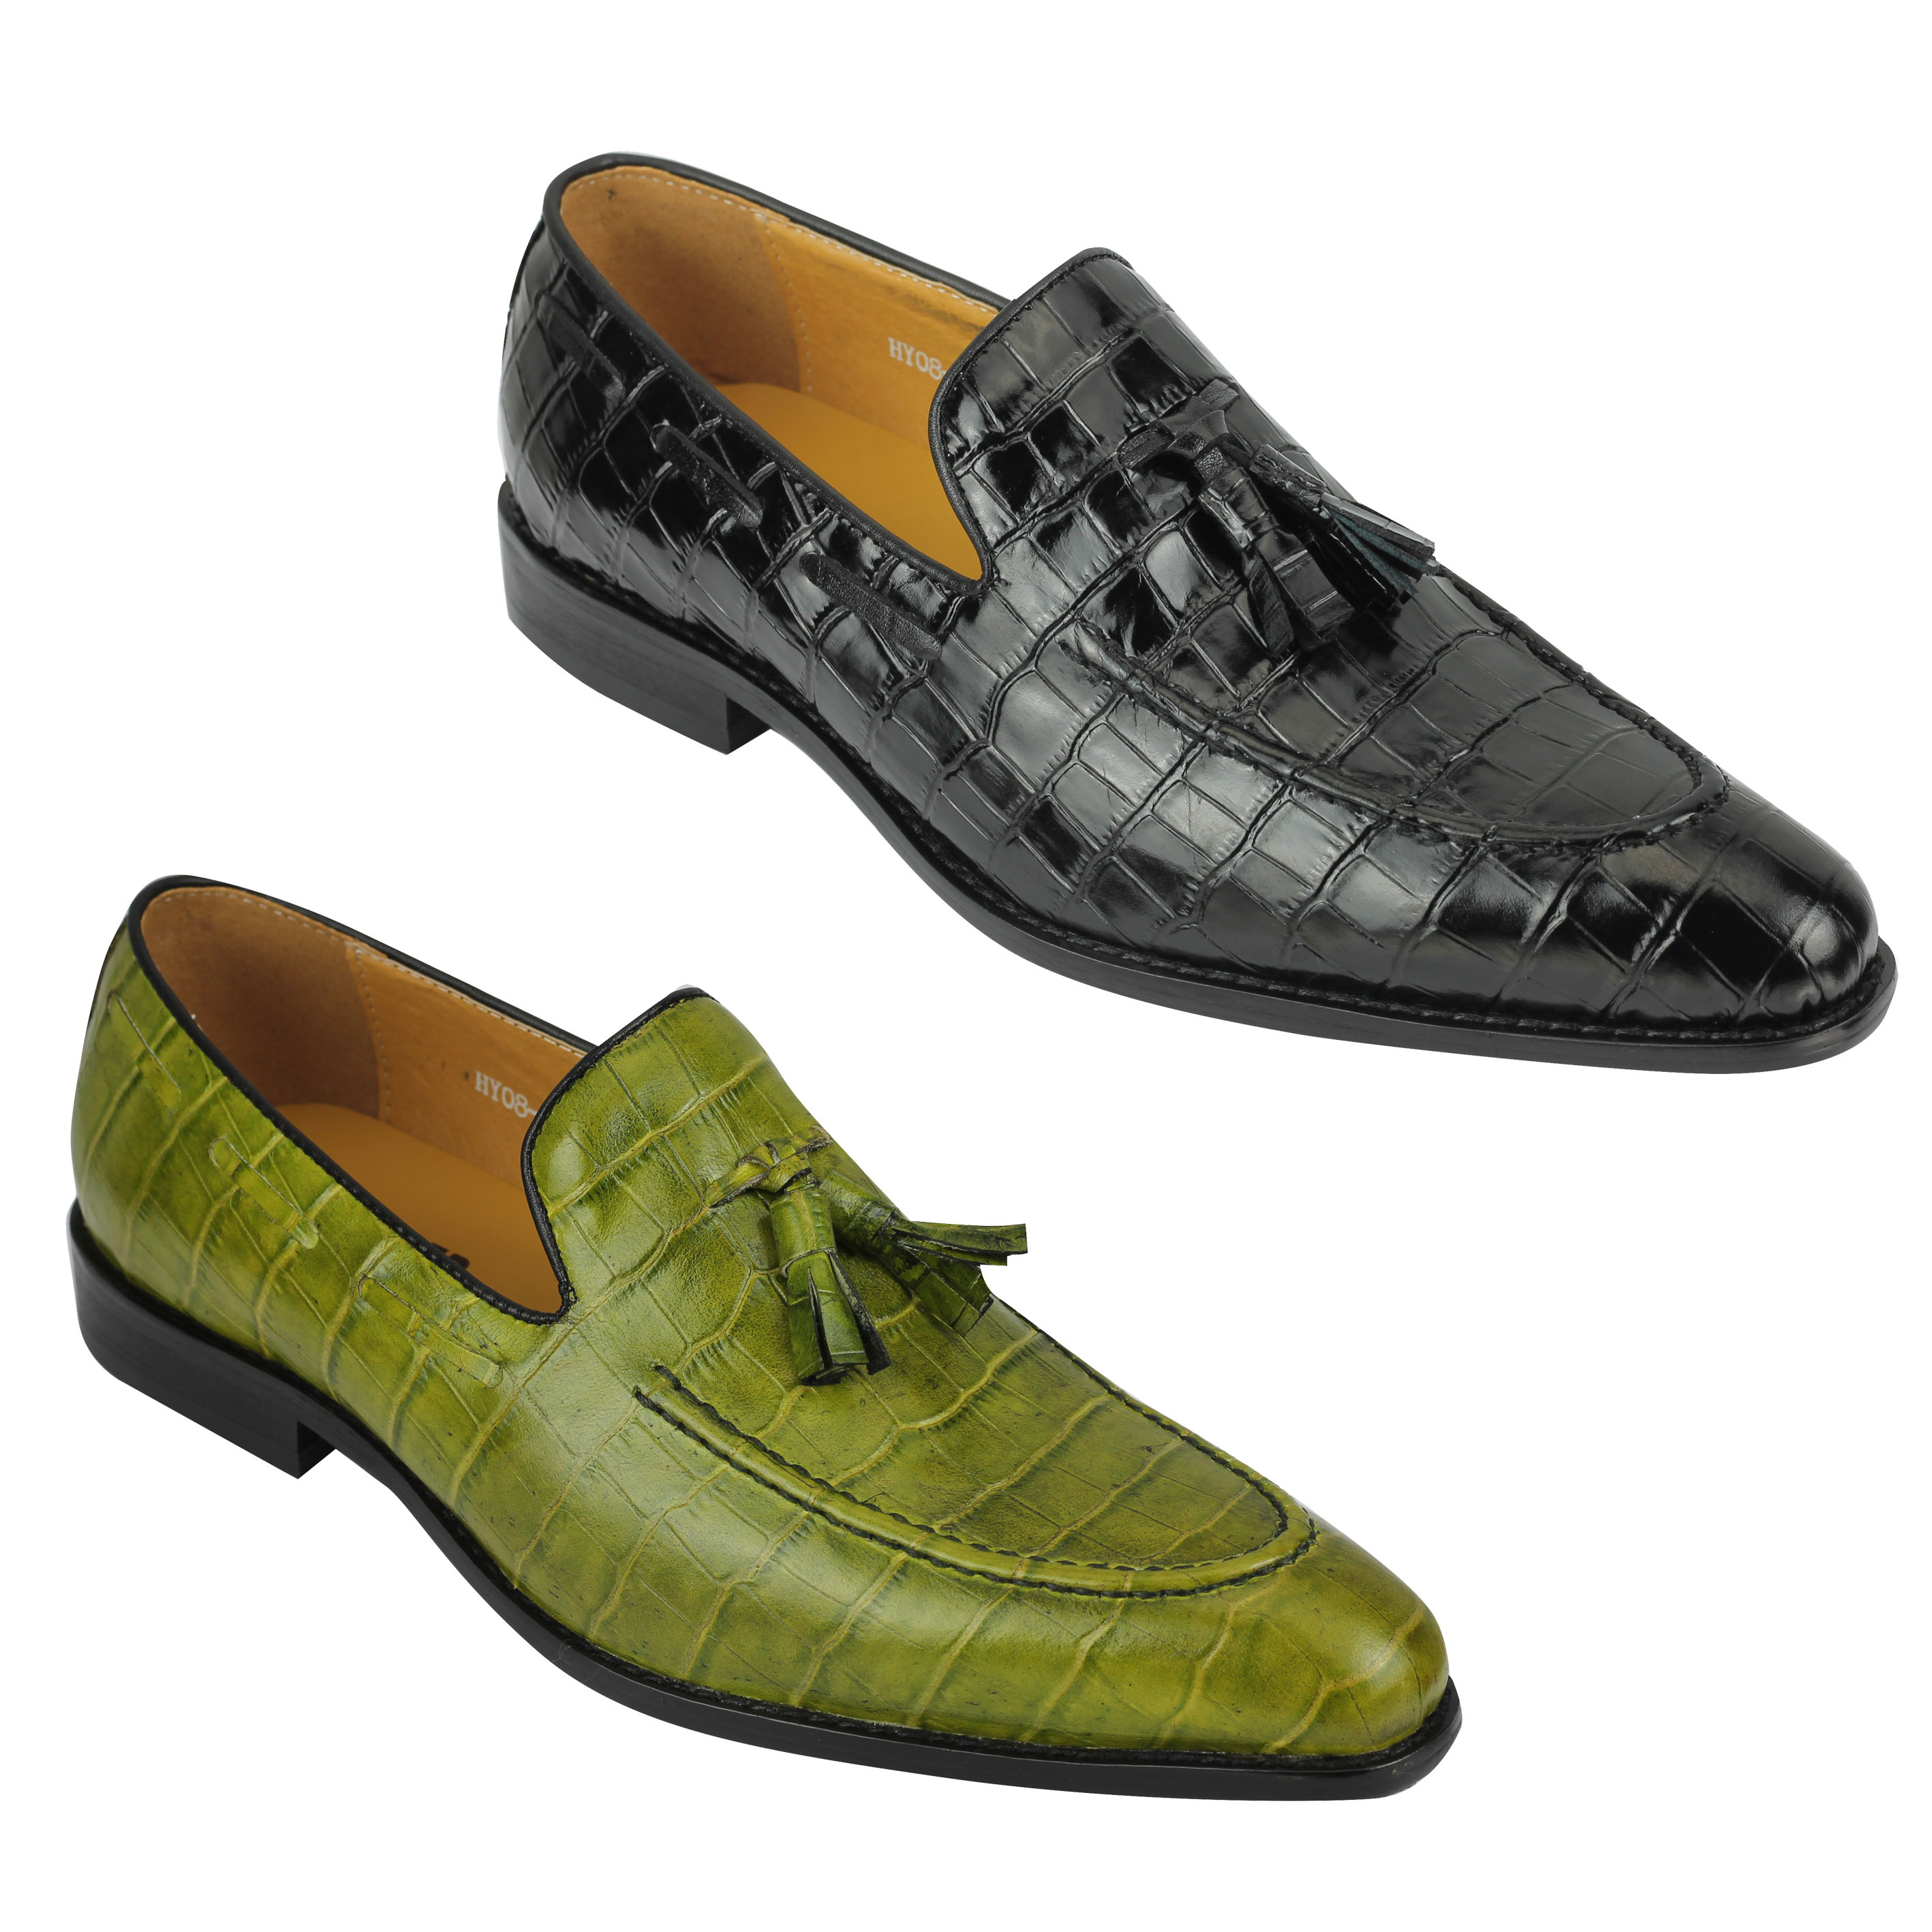 crocodile loafer shoes